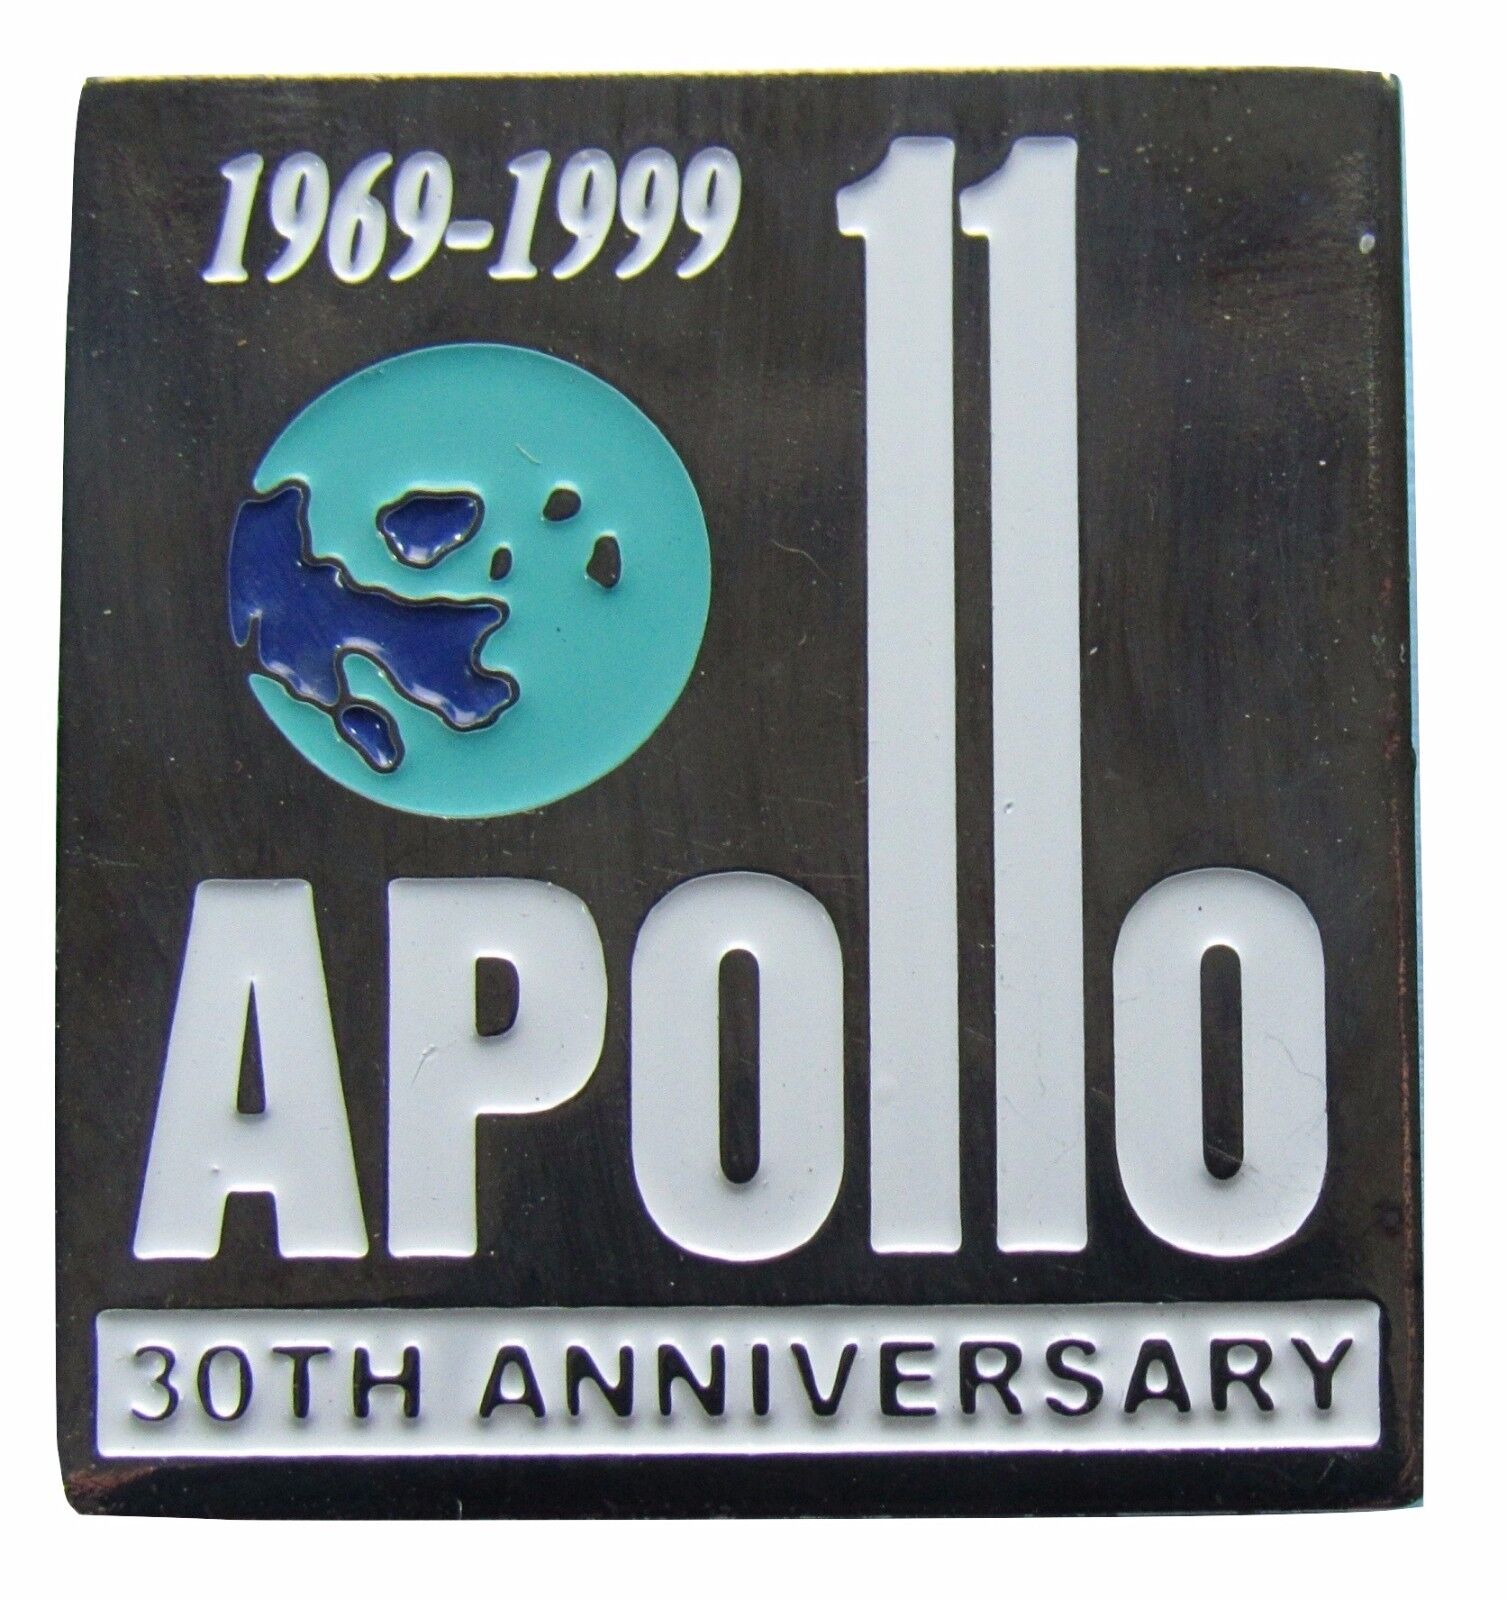 PIN enamel APOLLO 11 XI - 30th Anniversary  1969 - 1999 vtg NASA Neil Armstrong